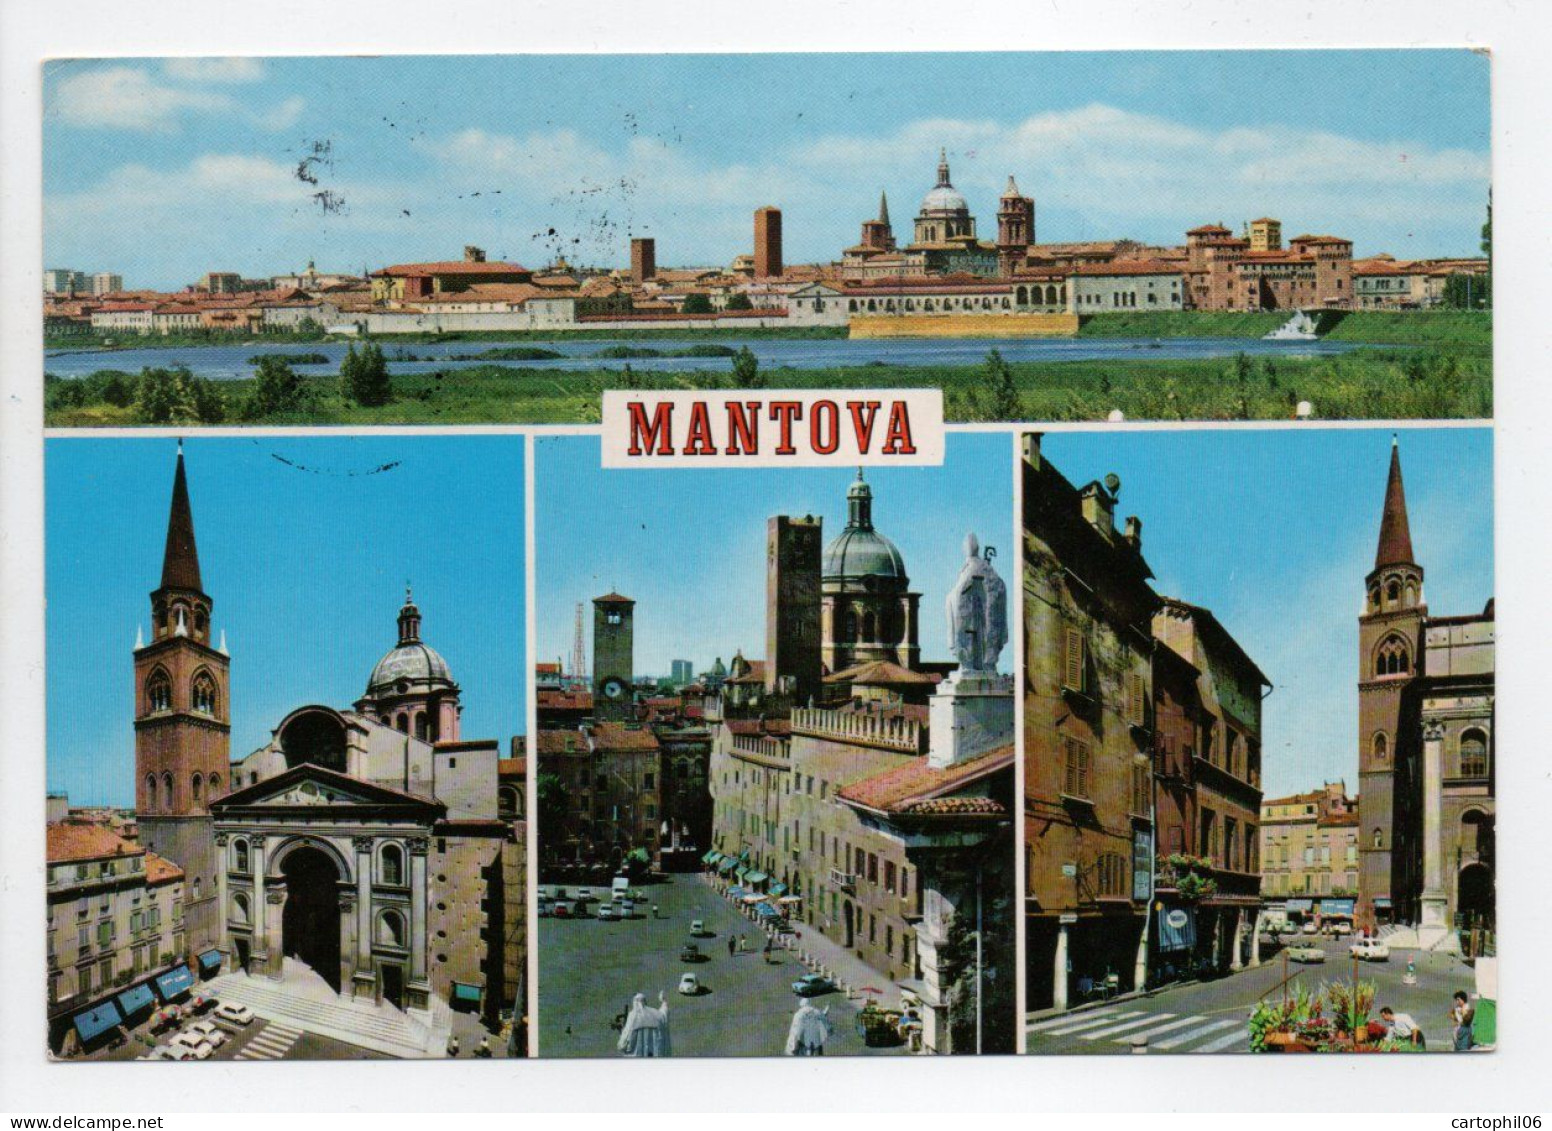 - Carte Postale MANTOVA (Italie) Pour SAINT-VIATRE (France) 19.4.1990 - TAXE A ETUDIER - - Taxe